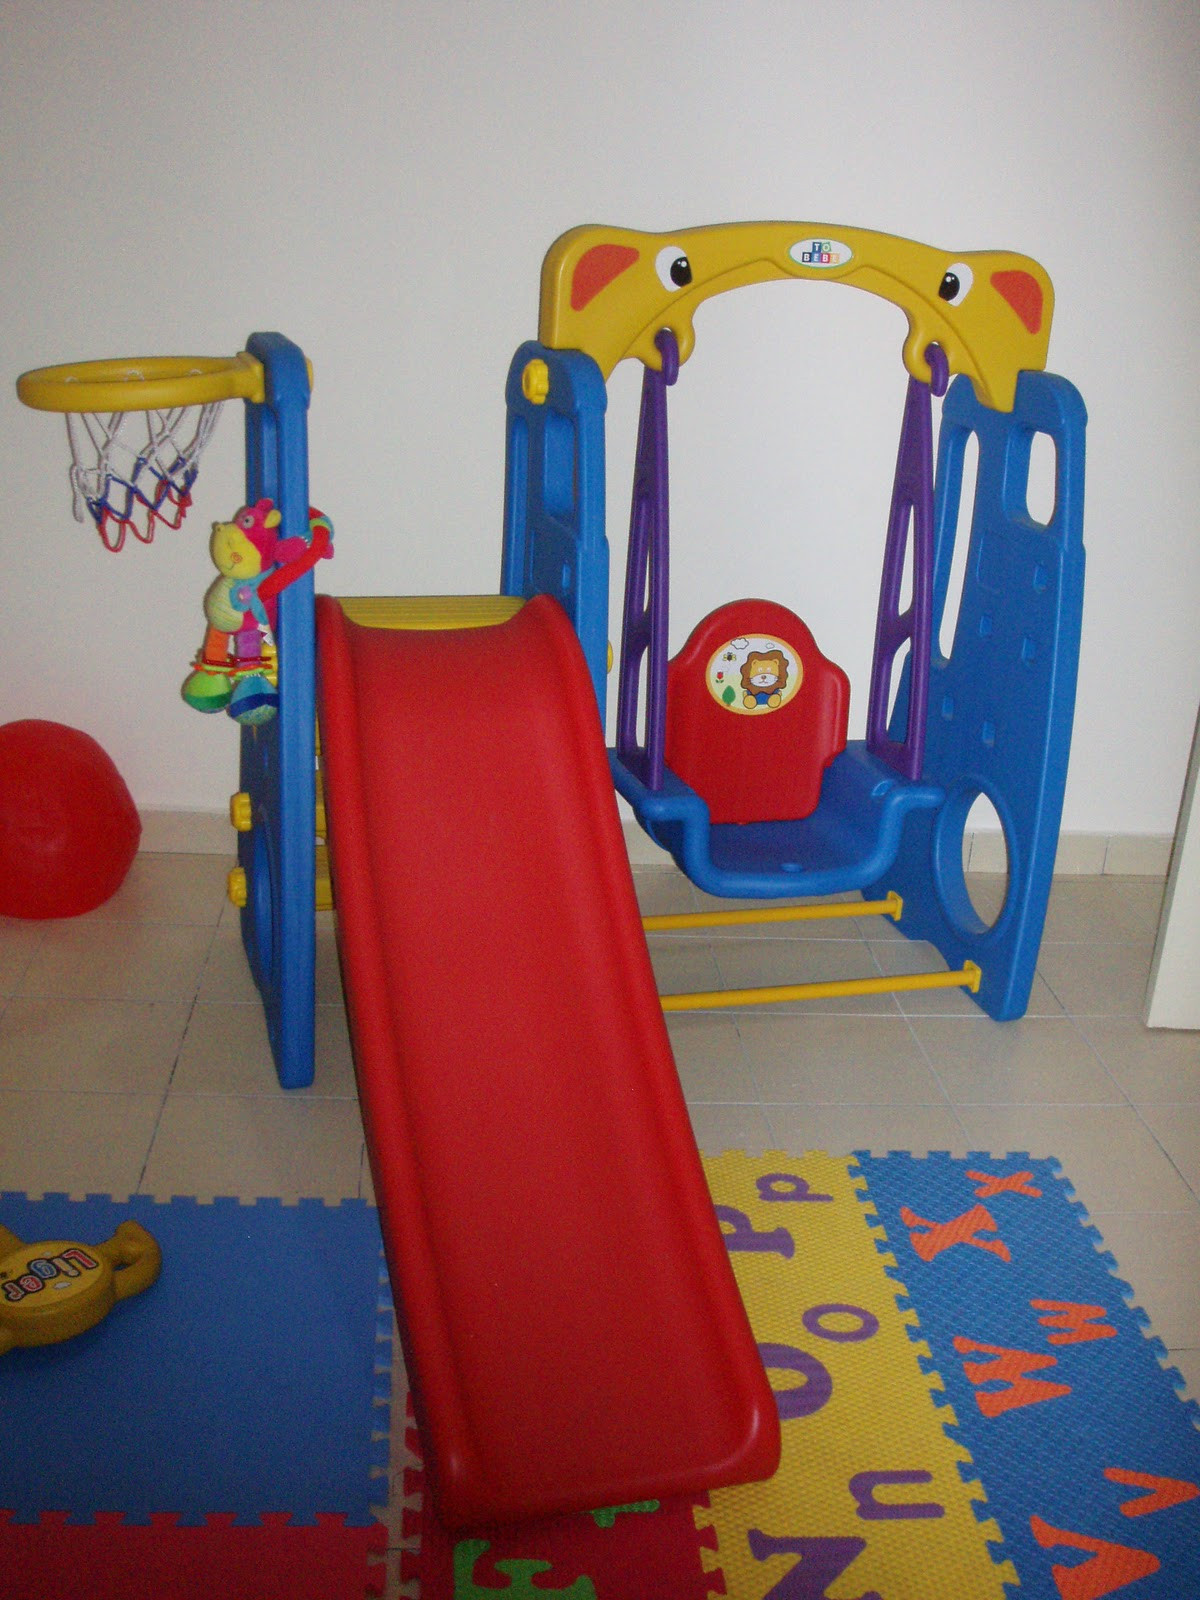 Indoor Slide For Kids
 myjunkmyprecious Kids Swing & Slide used Indoor only